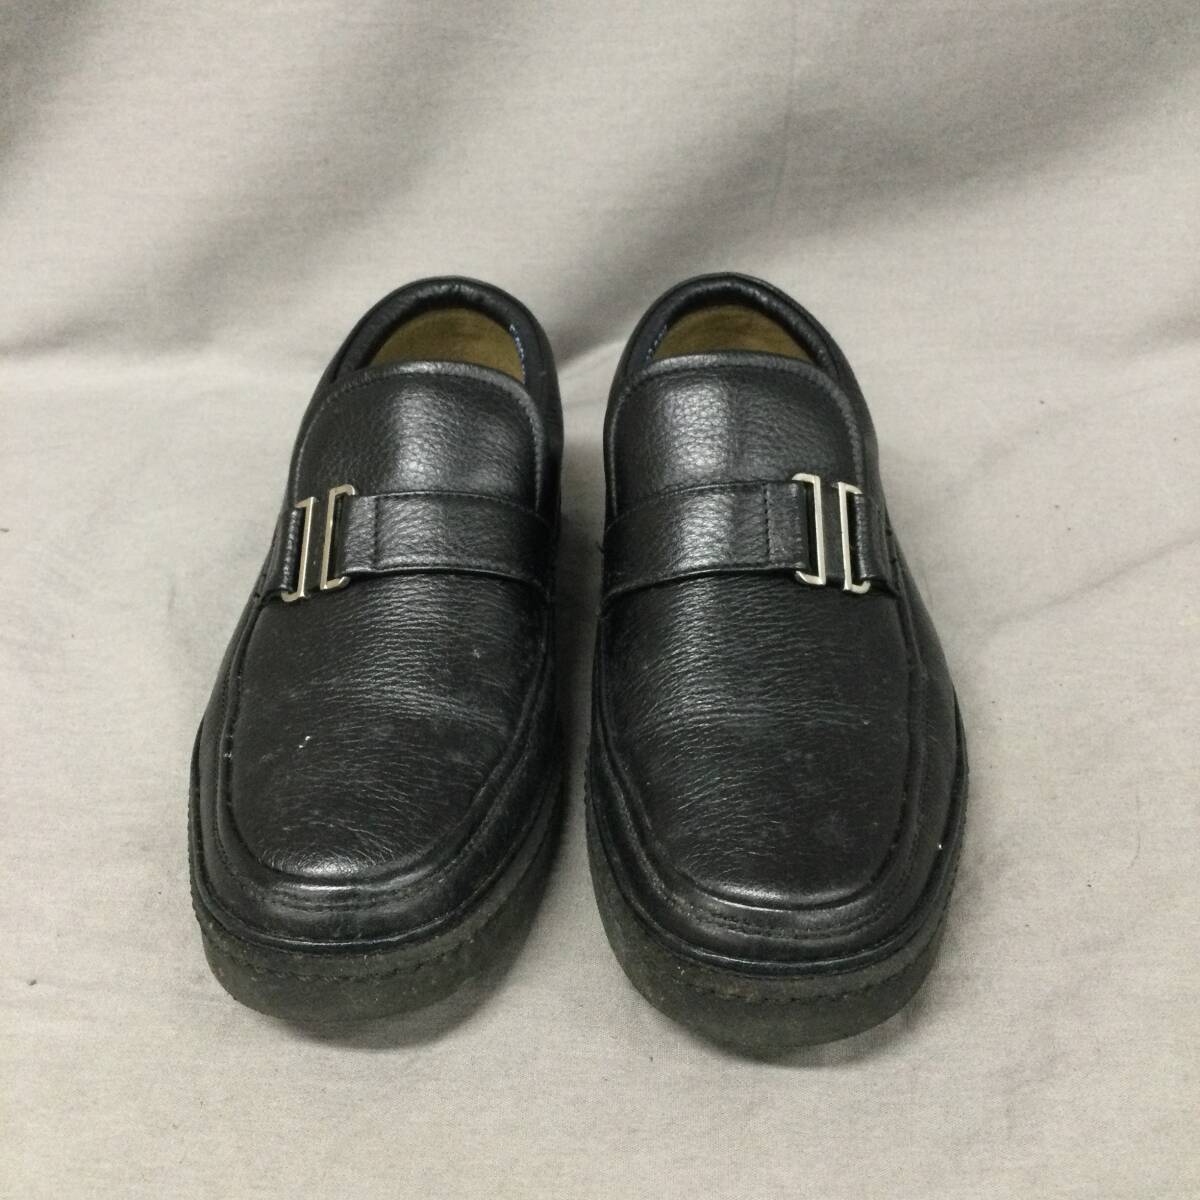 060321 261061-2 DAKS ダックス サイズ 23.5EEE レディース ブラック 靴の画像1